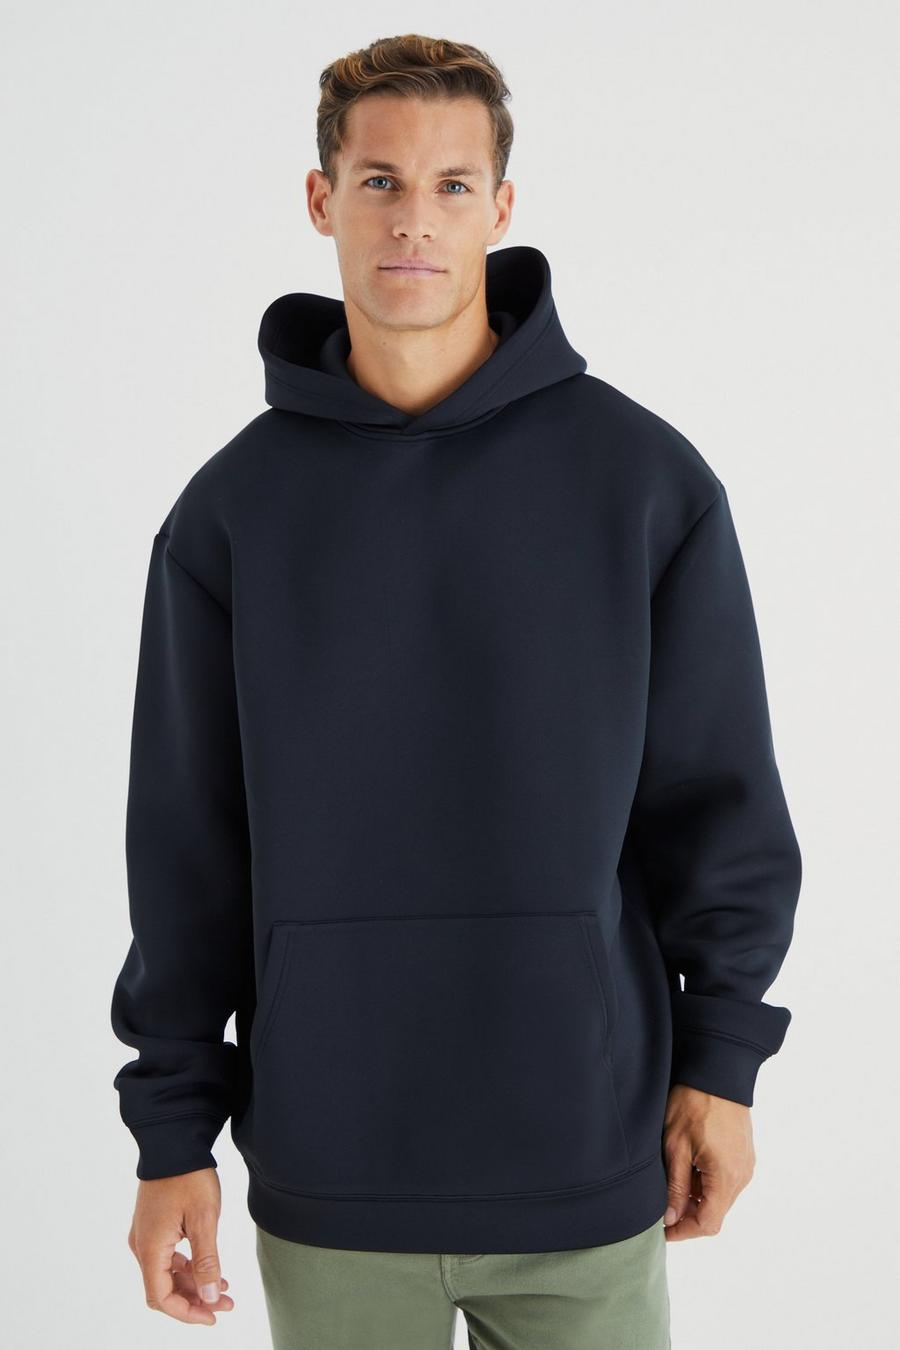 Core Fleece Oversized Hoodie in Grey Mix, Sweatshirts